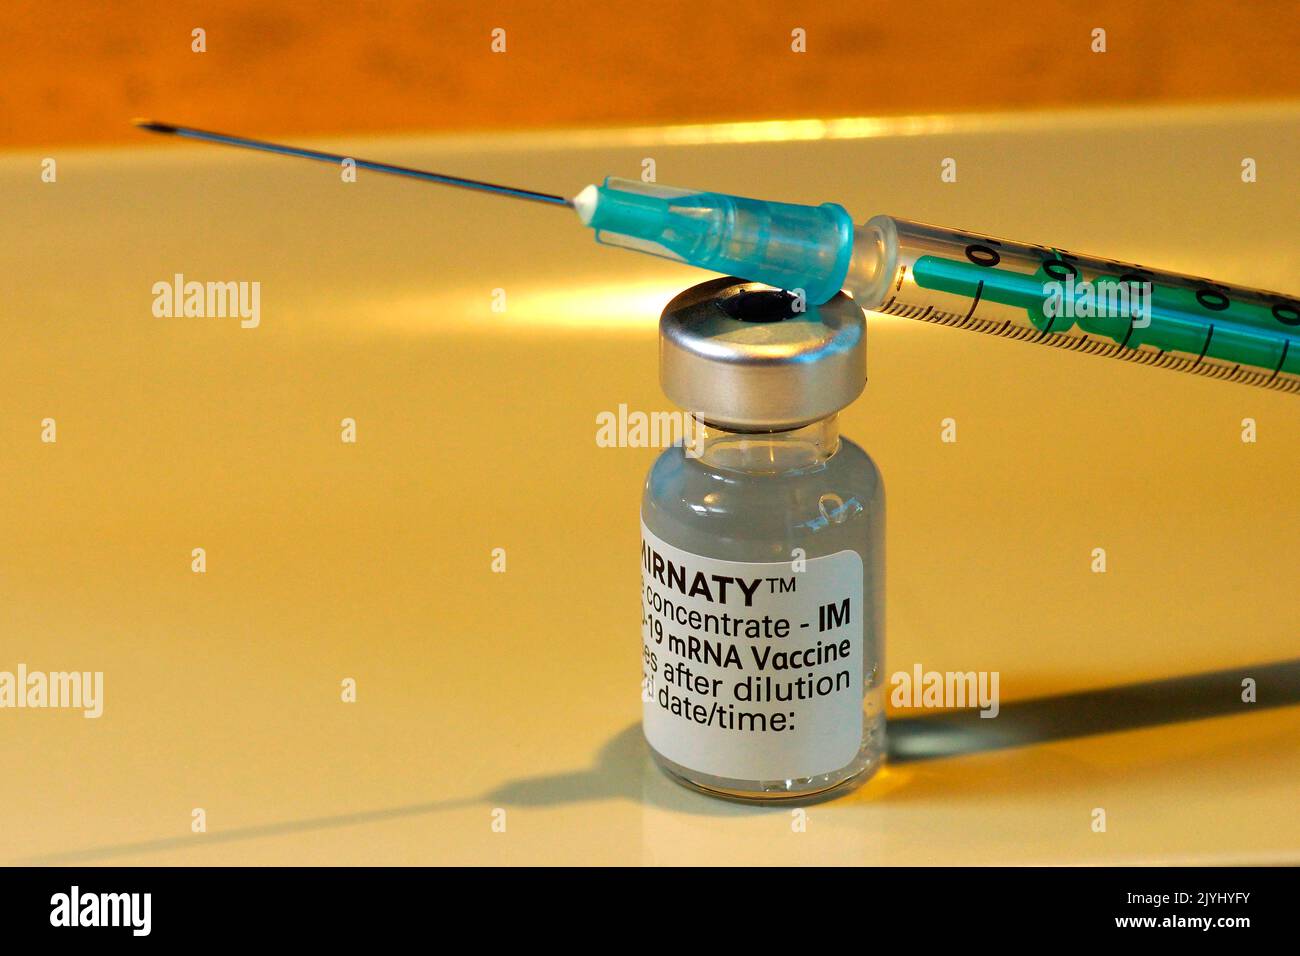 Injection avec le vaccin Corona Comirnaty de Biontex Pfizer Banque D'Images